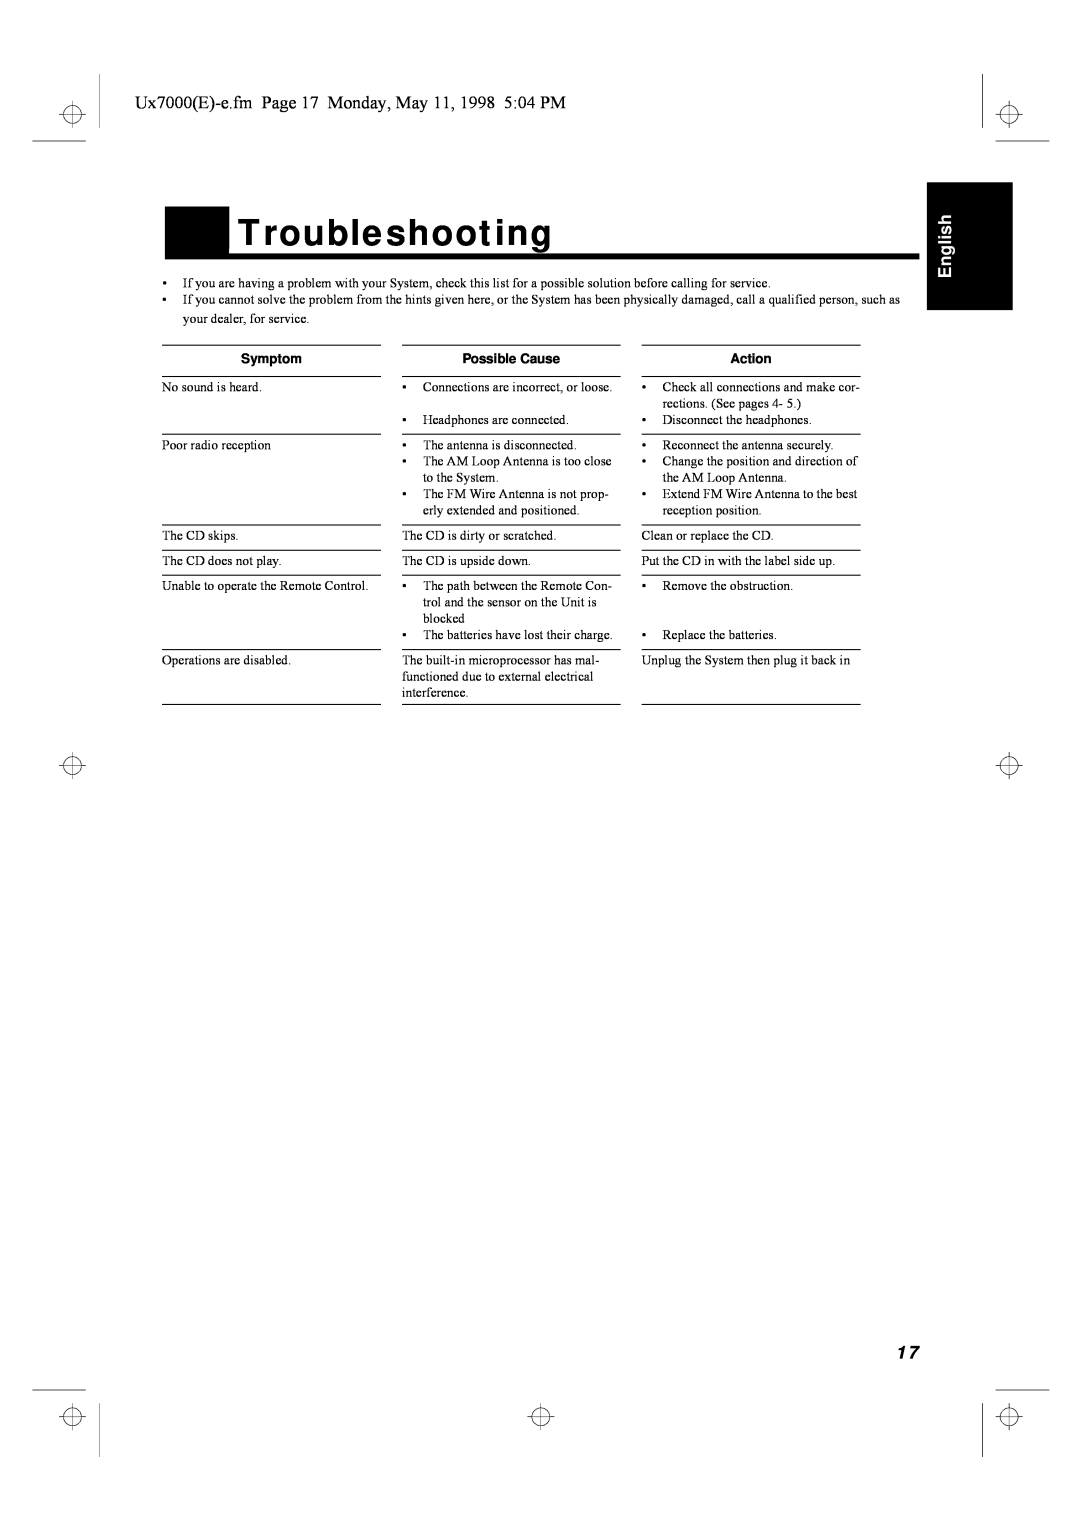 JVC UX-7000R manual Troubleshooting, English, Symptom, Possible Cause, Action 